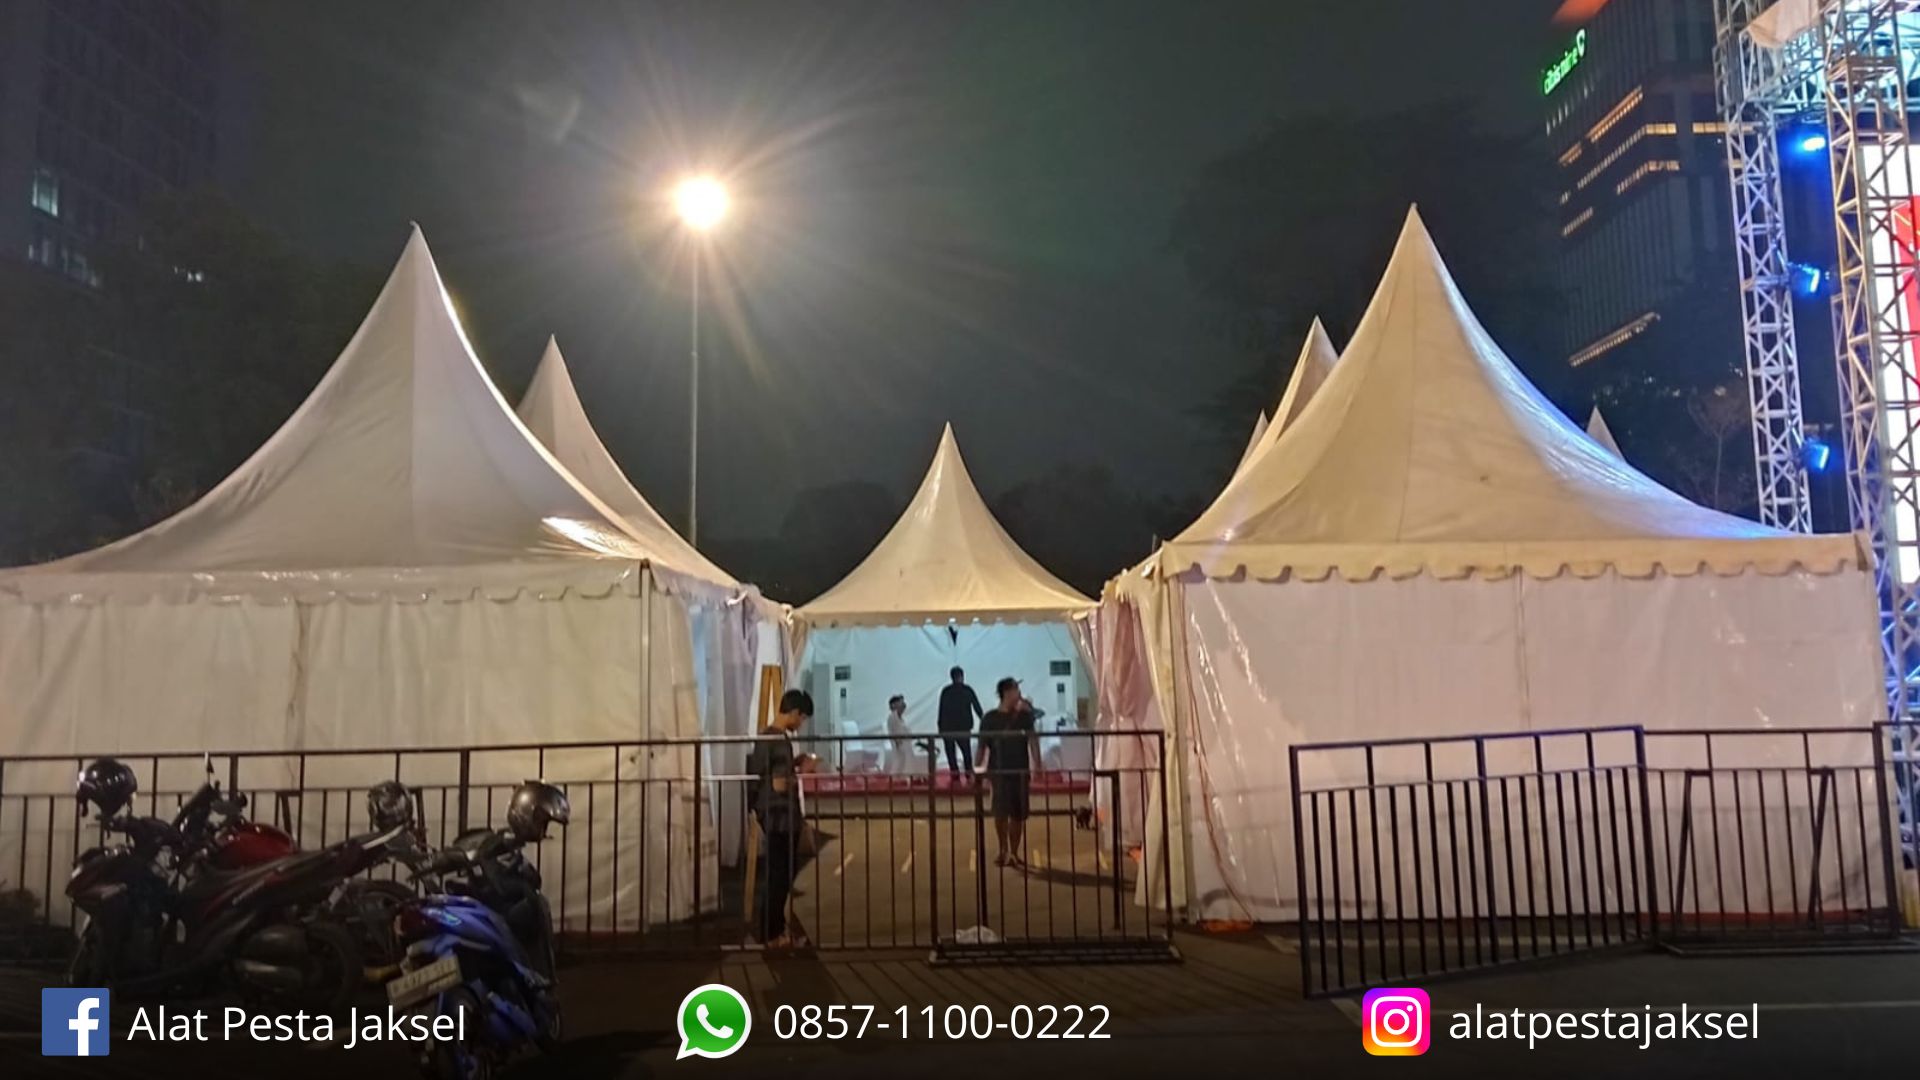 Jasa Layanan Sewa Tenda Bazar Out Door Atap Lancip Jakarta